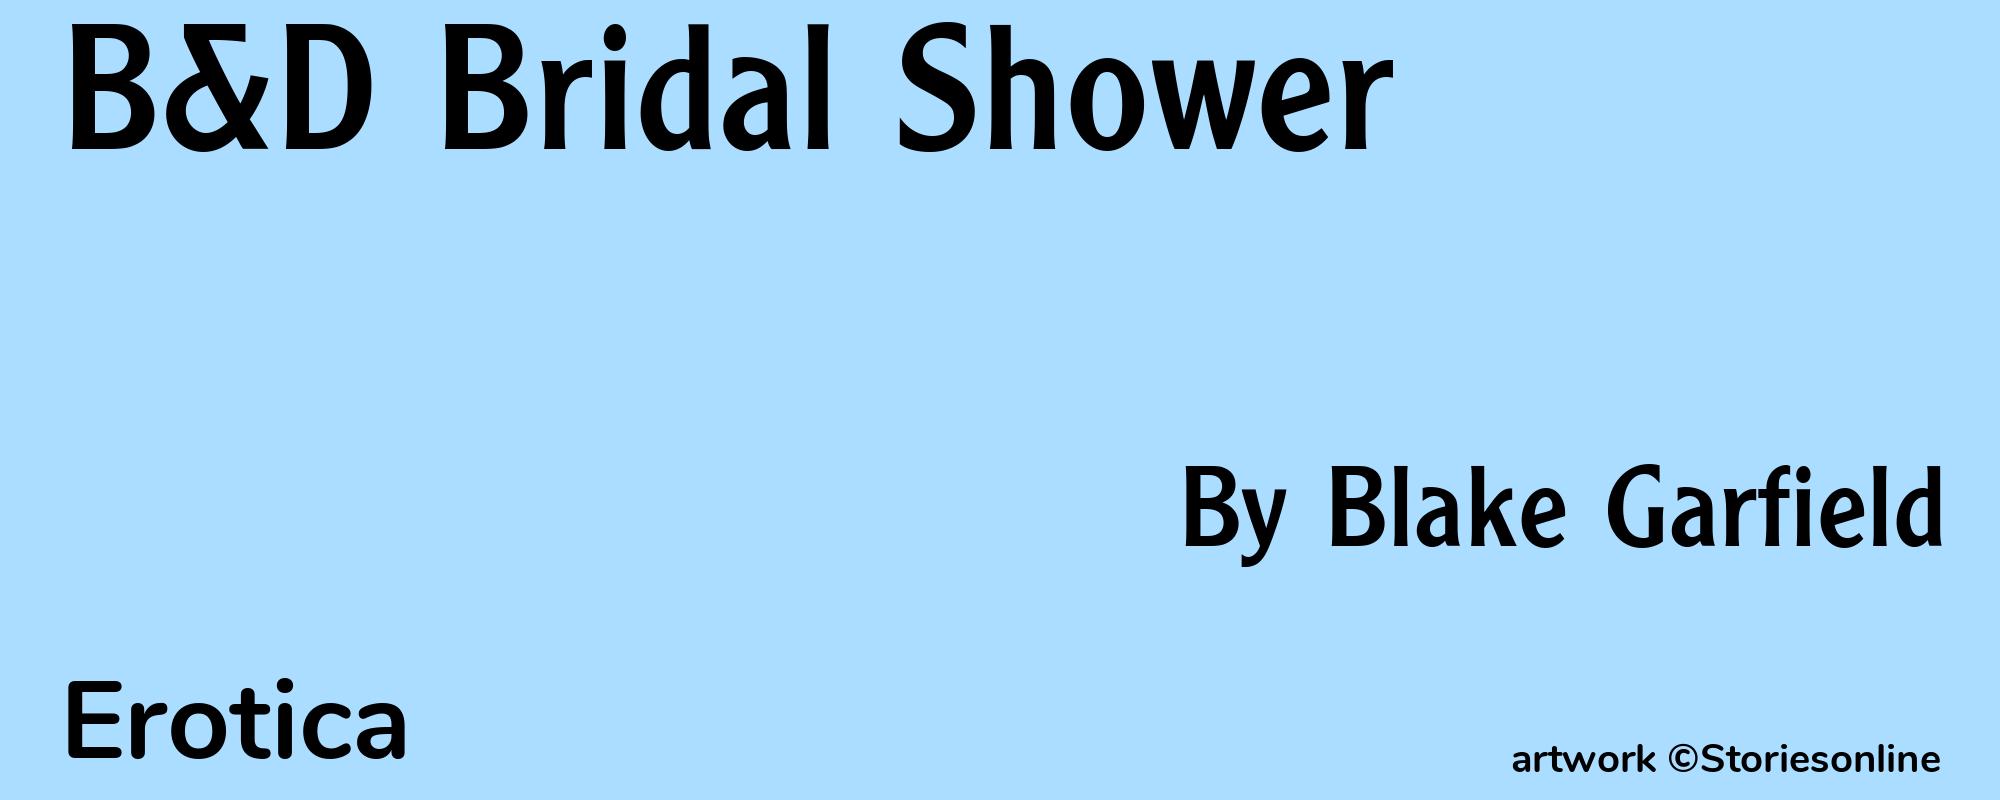 B&D Bridal Shower - Cover